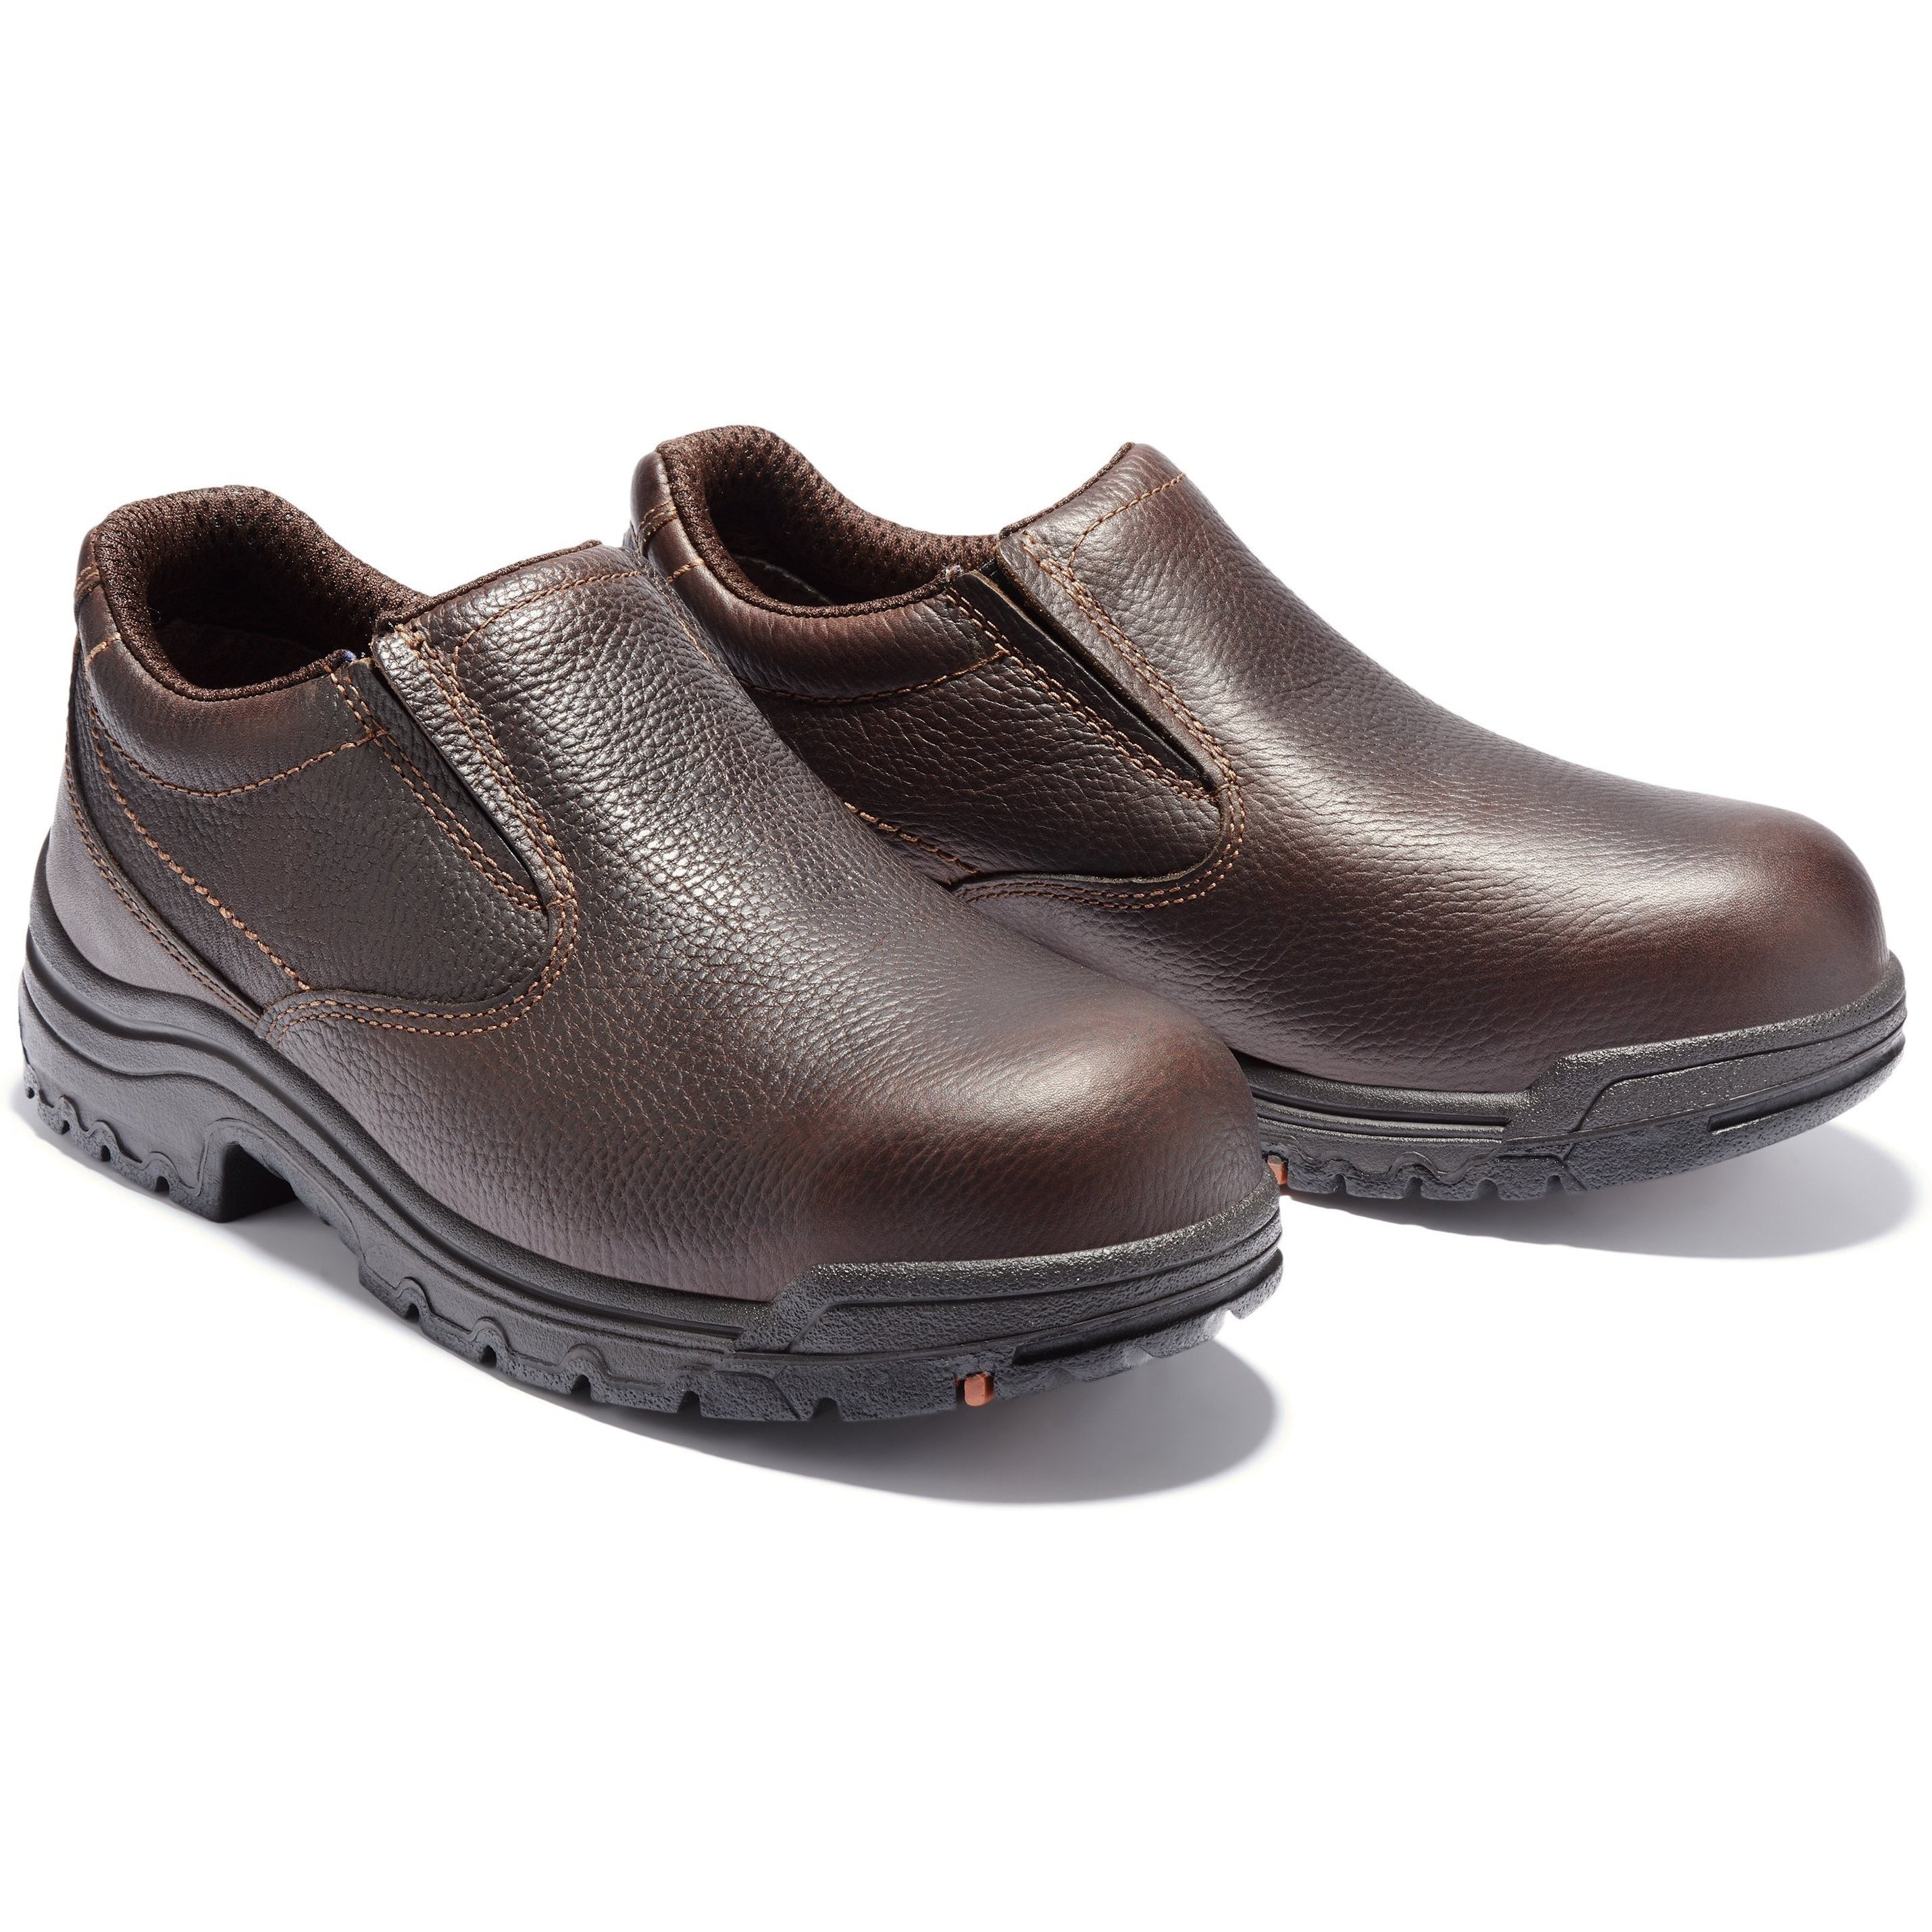 Timberland PRO Men's TiTAN Oxford Alloy Toe Work Shoe - TB153534230 7 / Medium / Brown - Overlook Boots